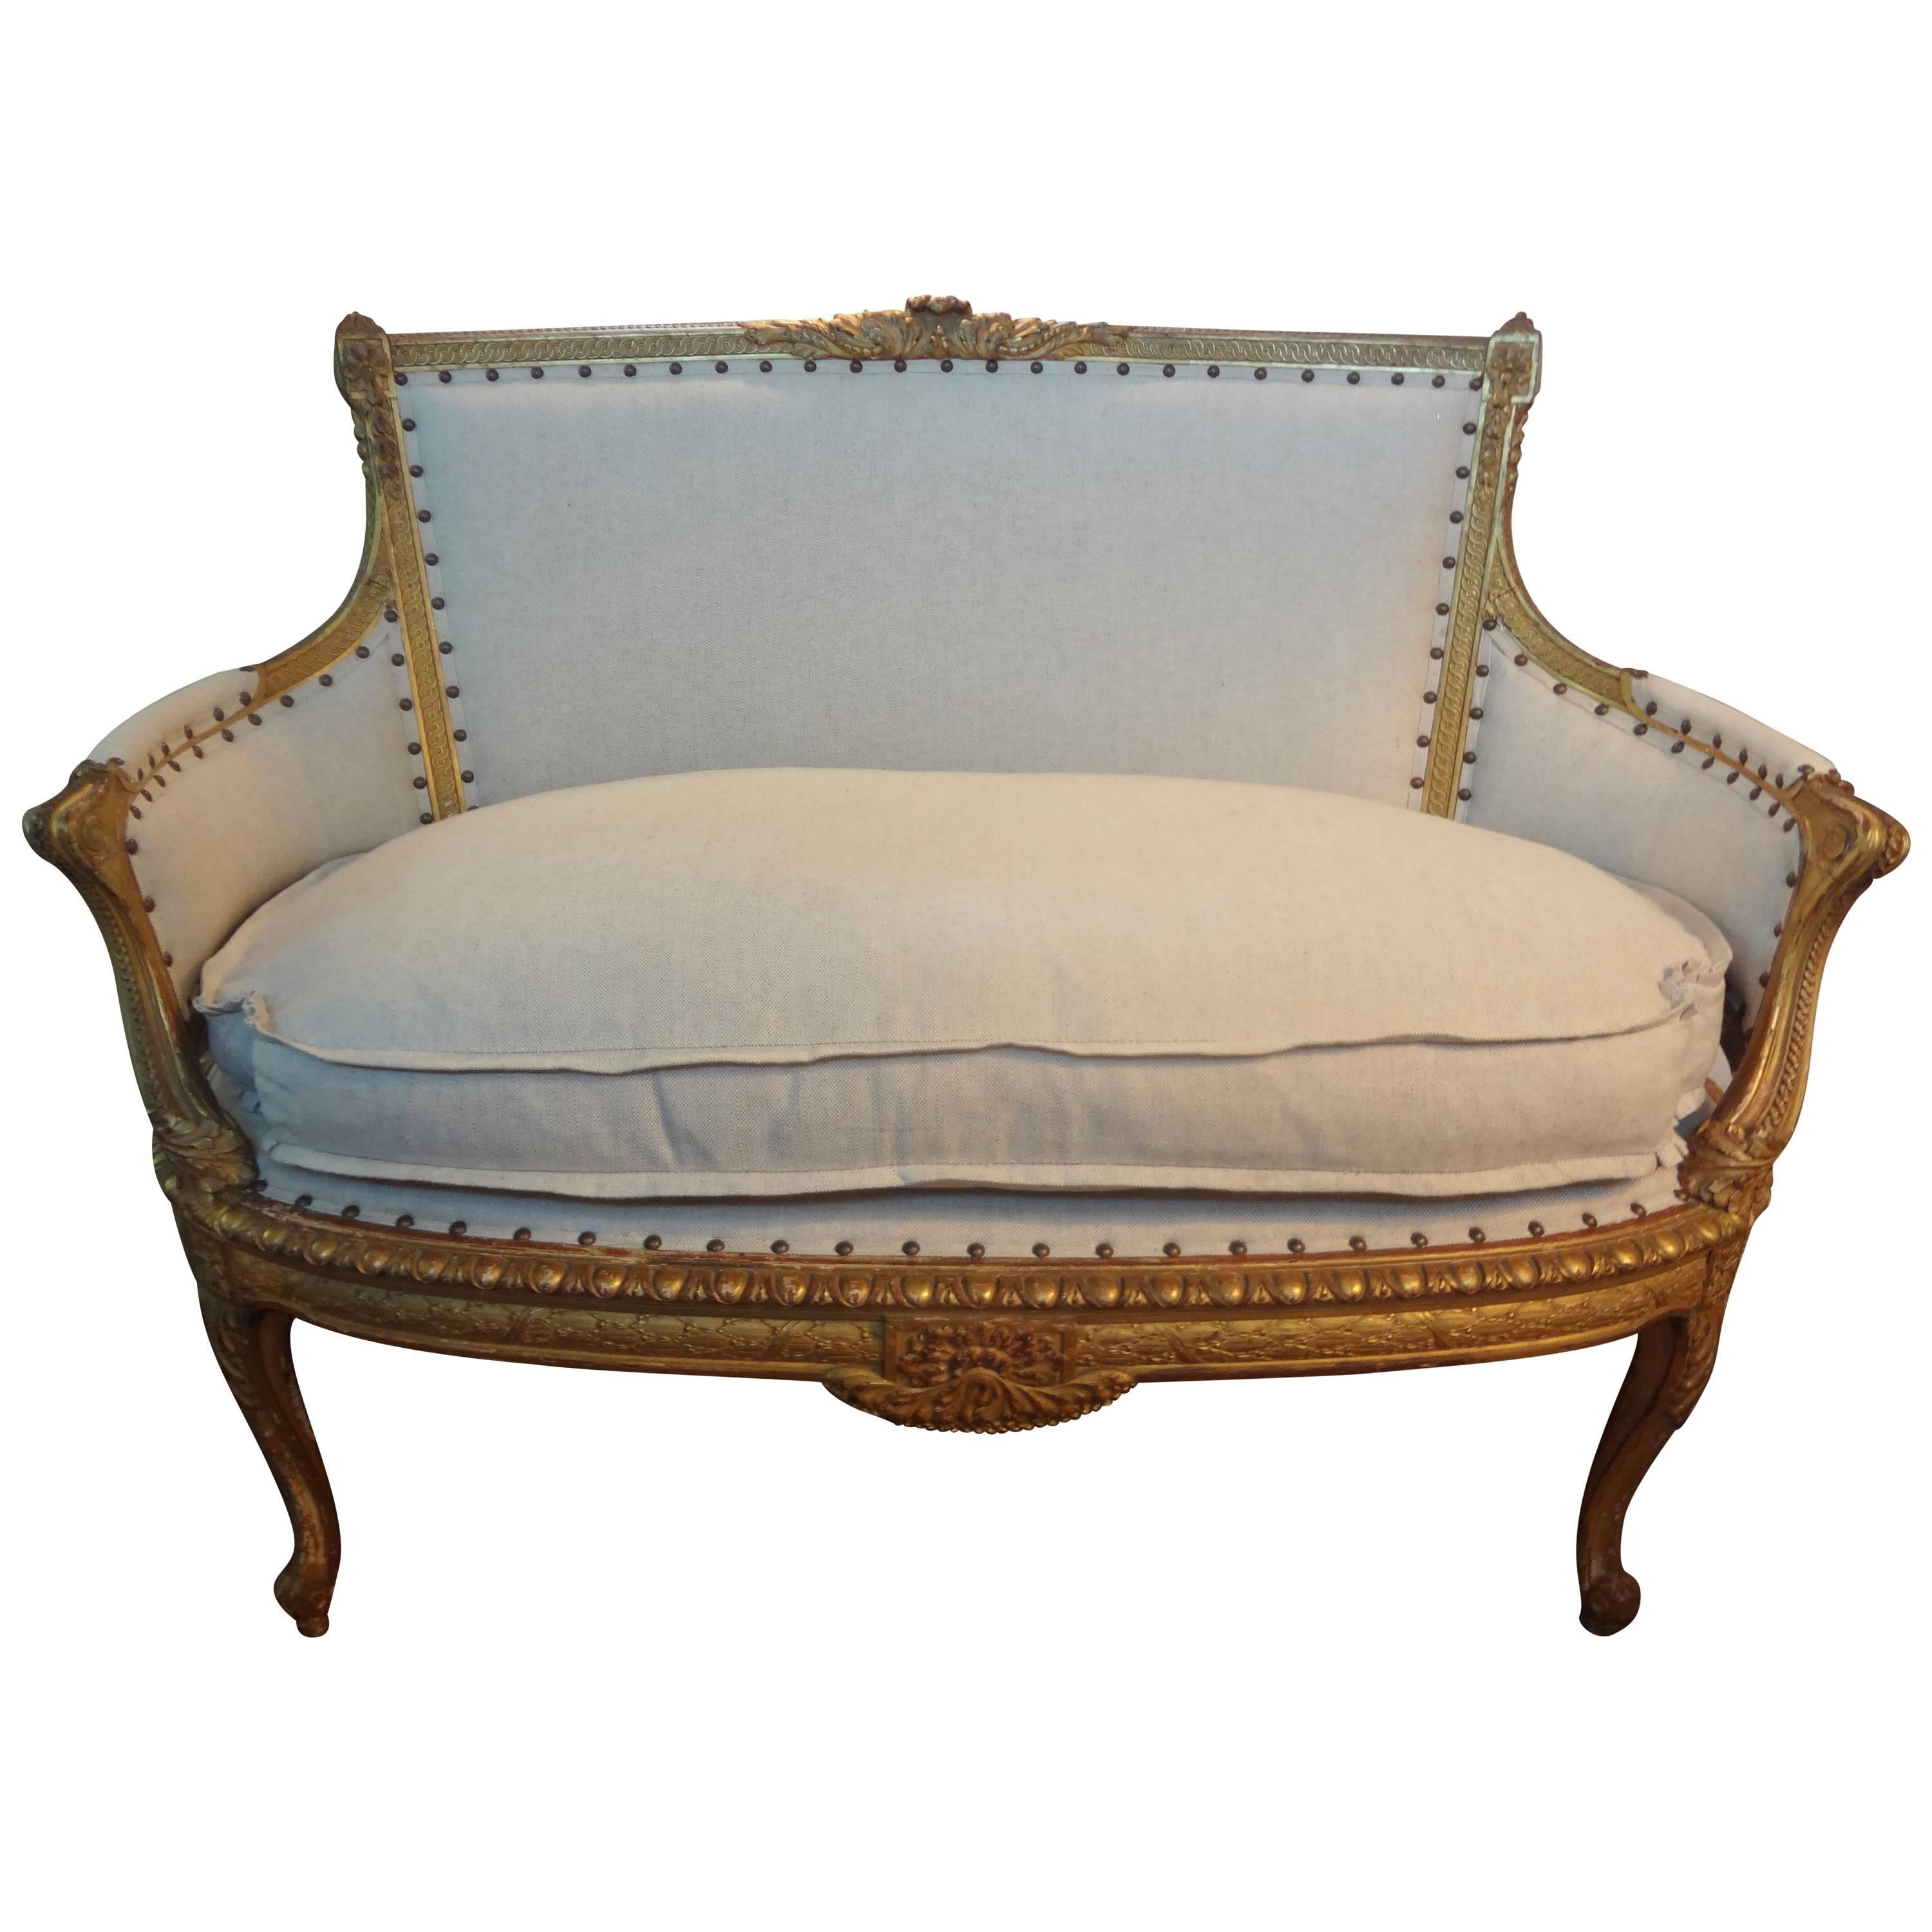 Antique French Regence Style Gilt Wood Canape Or Sofa